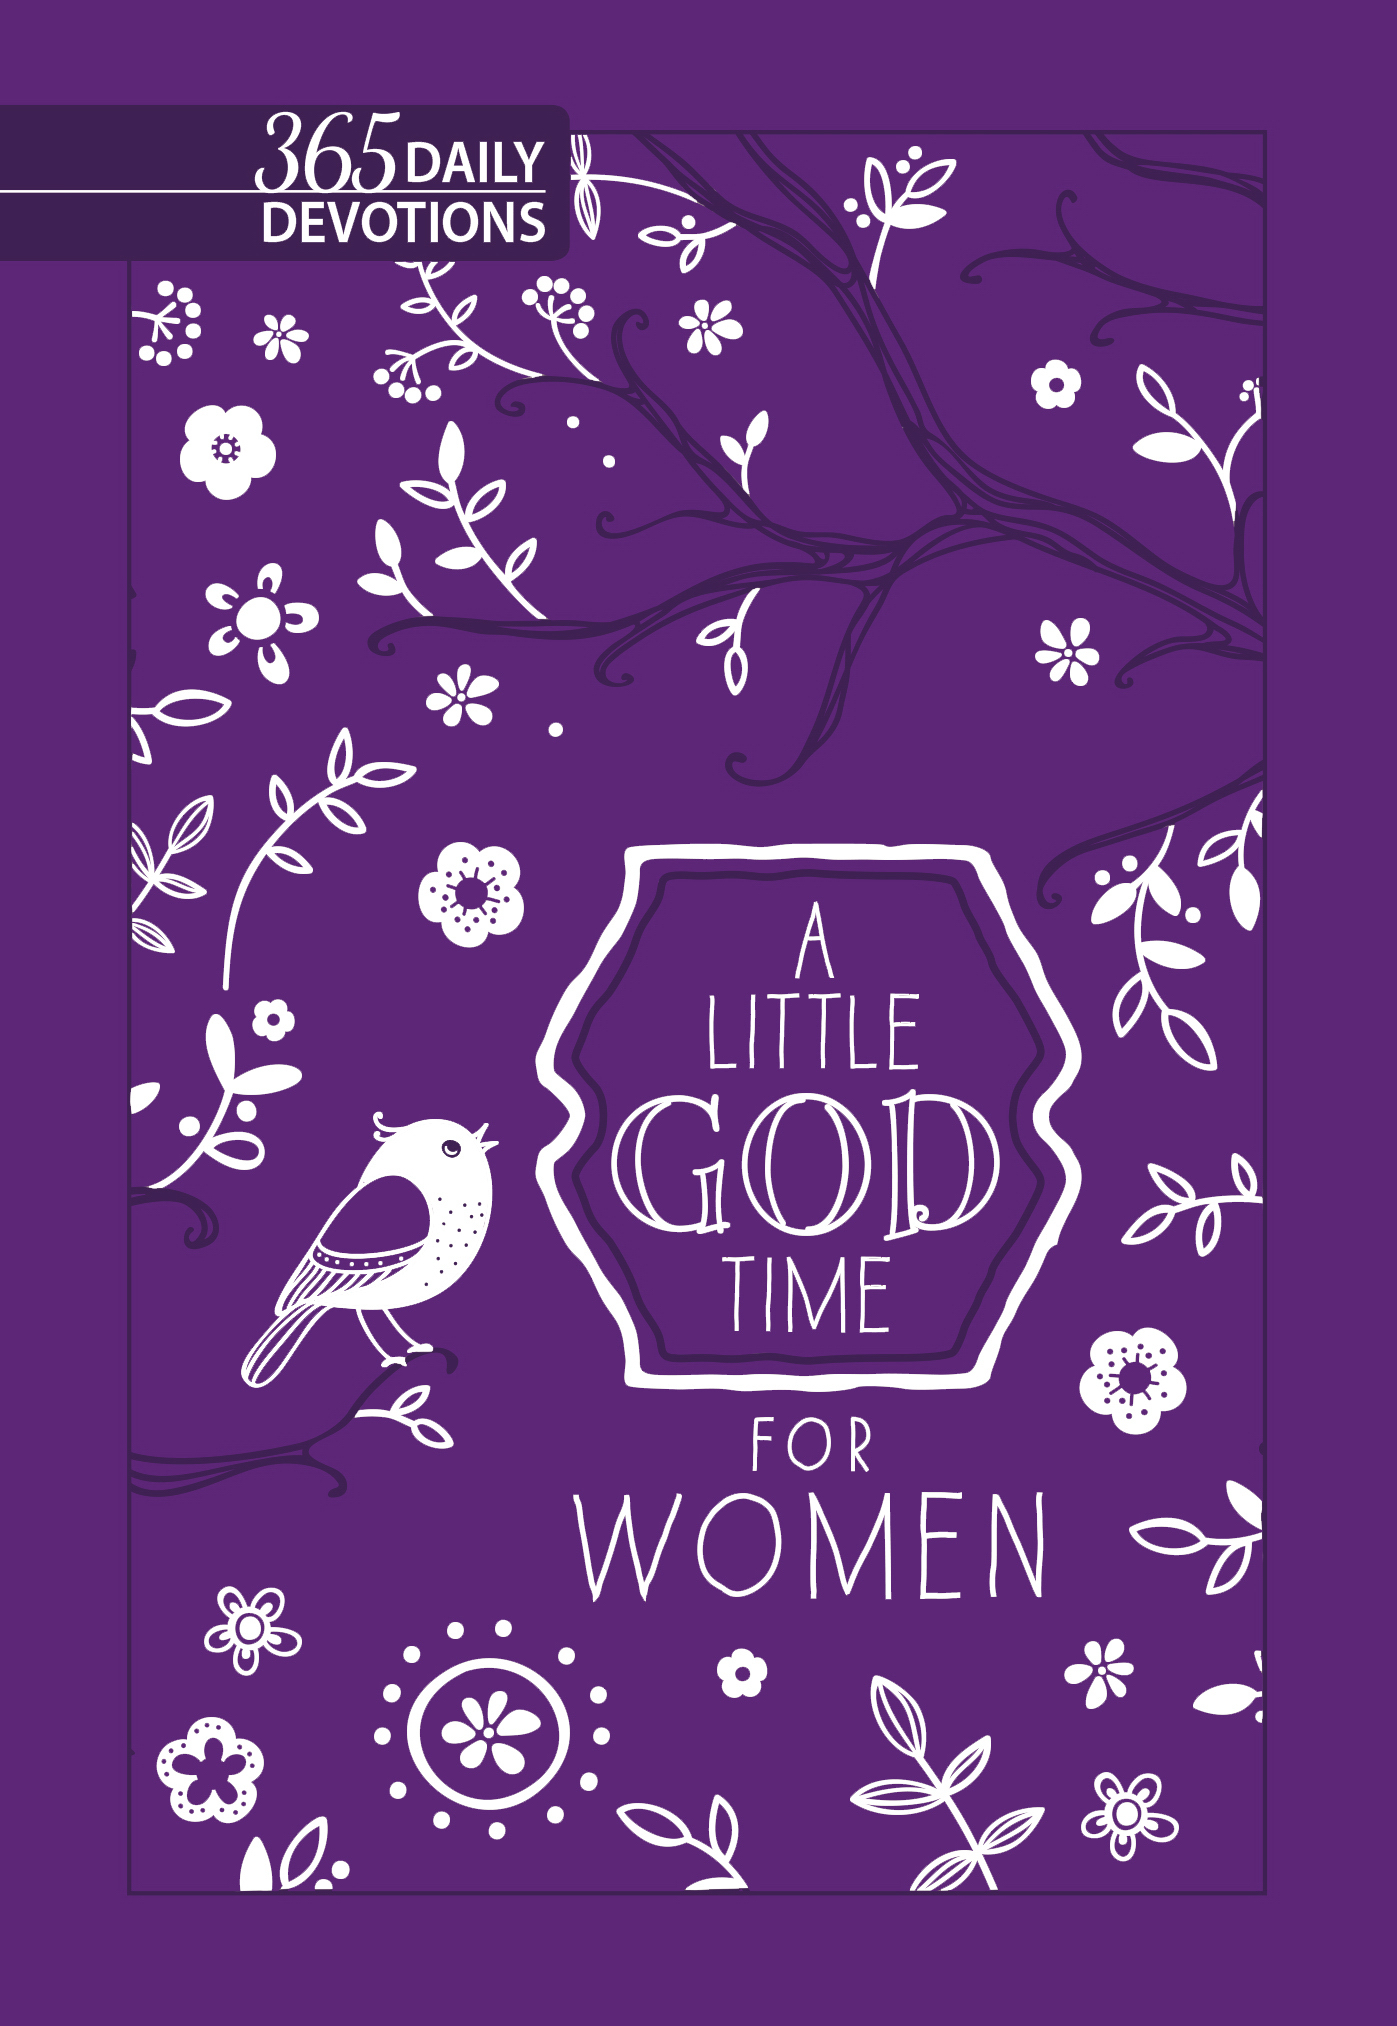 Little God Time for Women, A 365 Daily Devotions (Purple)